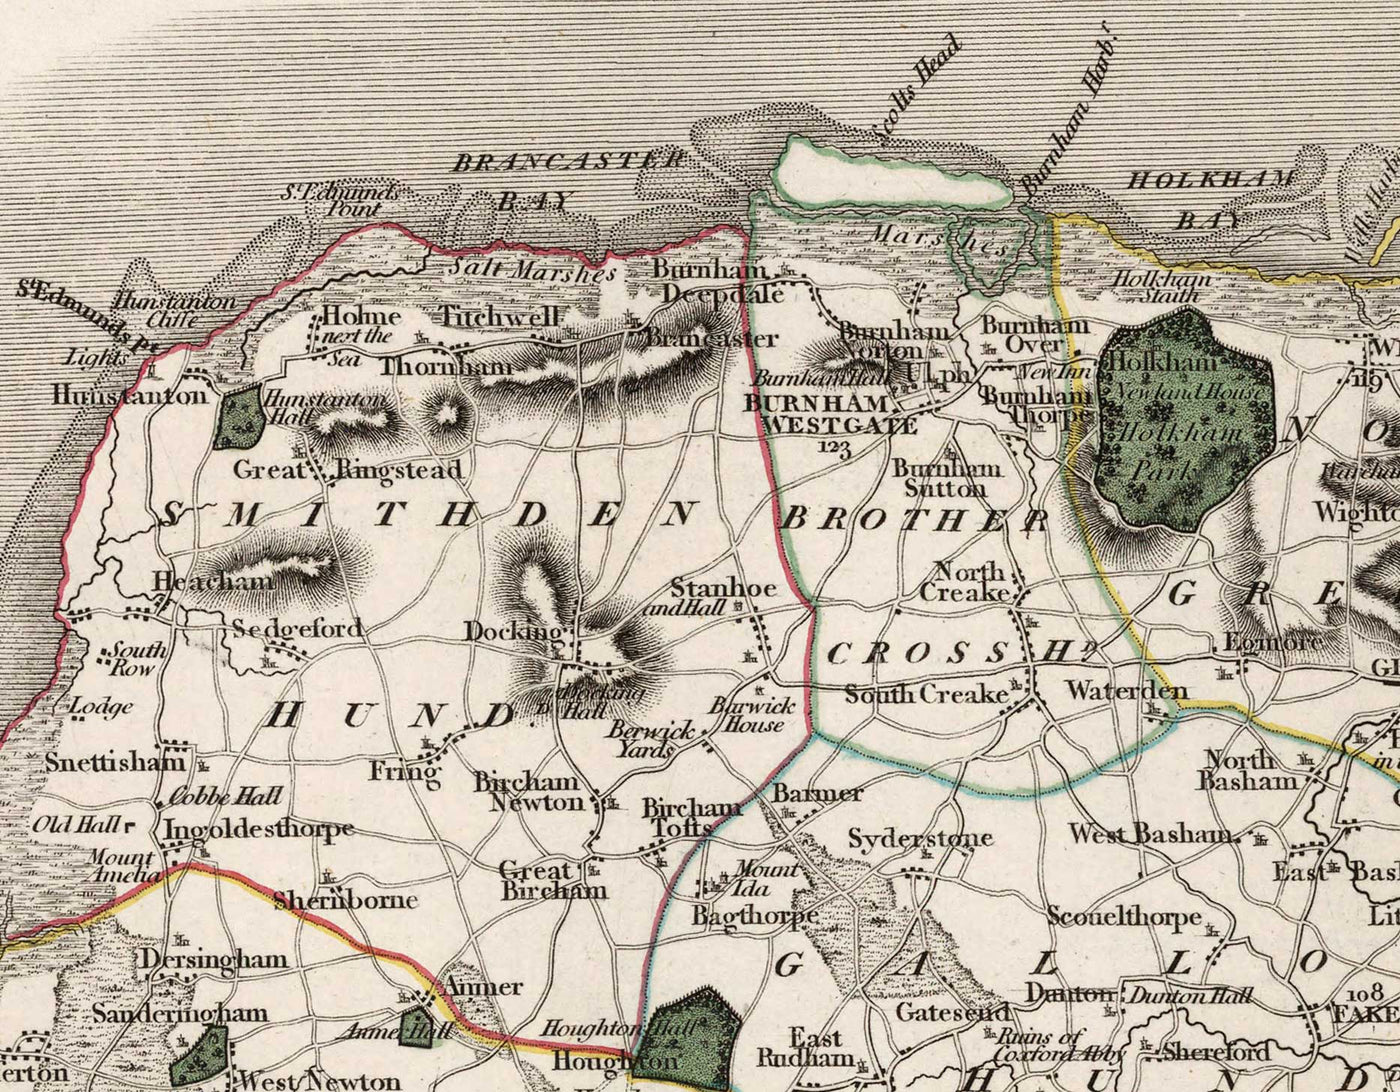 Antiguo mapa de Norfolk en 1807 por John Cary - Norwich, Cromer, Great Yarmouth, Thetford, King's Lynn